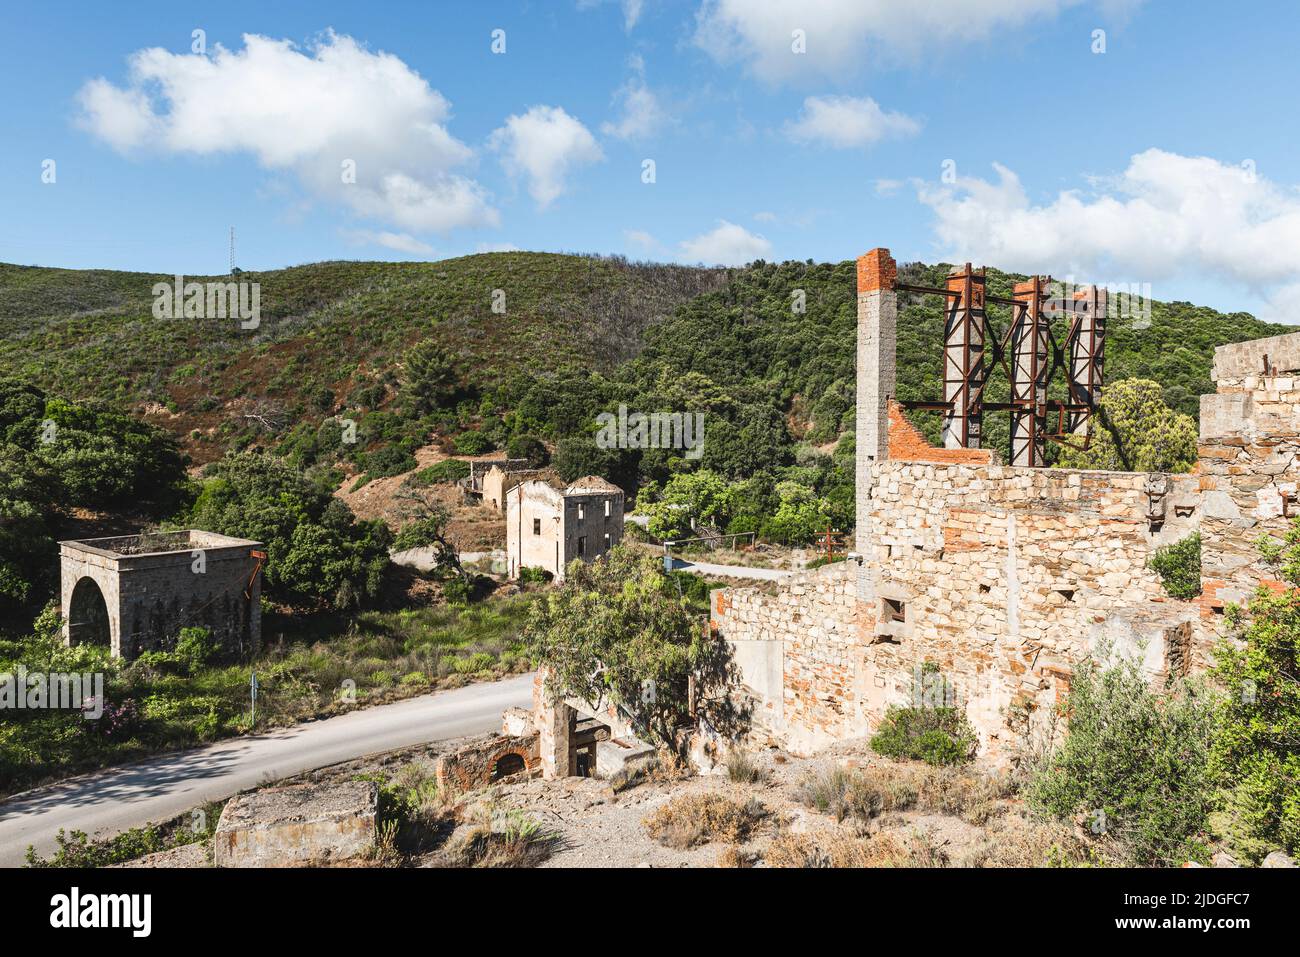 Deteriorated facades and rusty metal parts in the ruins of the abandoned Naracauli ore mine near Ingurtosu, Costa Verde, Sardinia, Italy Stock Photo